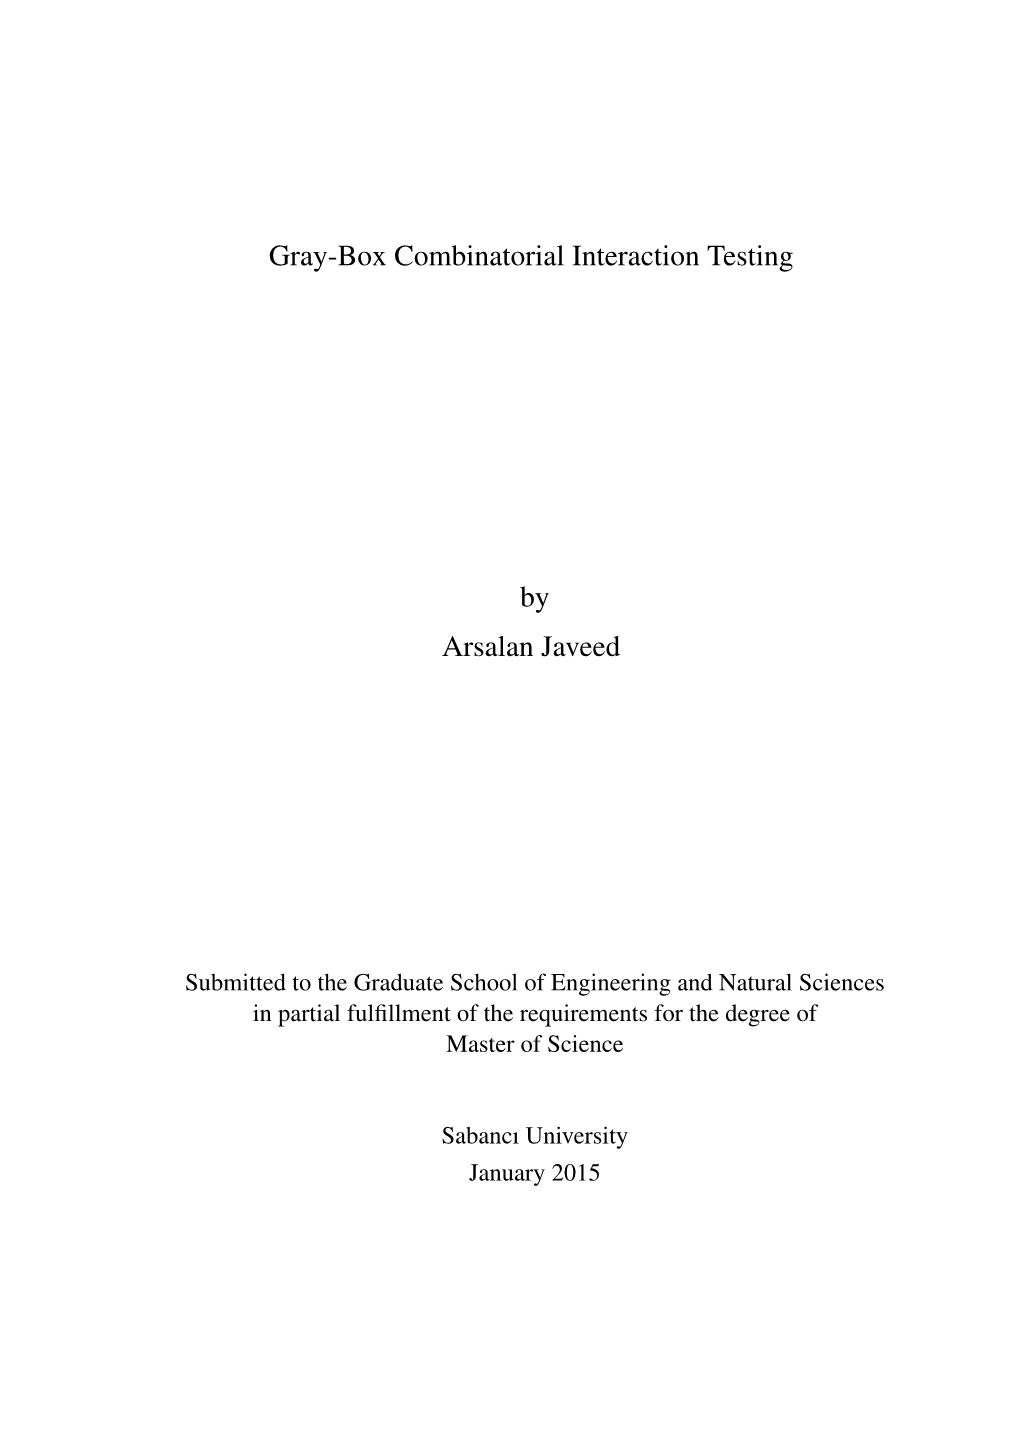 Gray-Box Combinatorial Interaction Testing by Arsalan Javeed